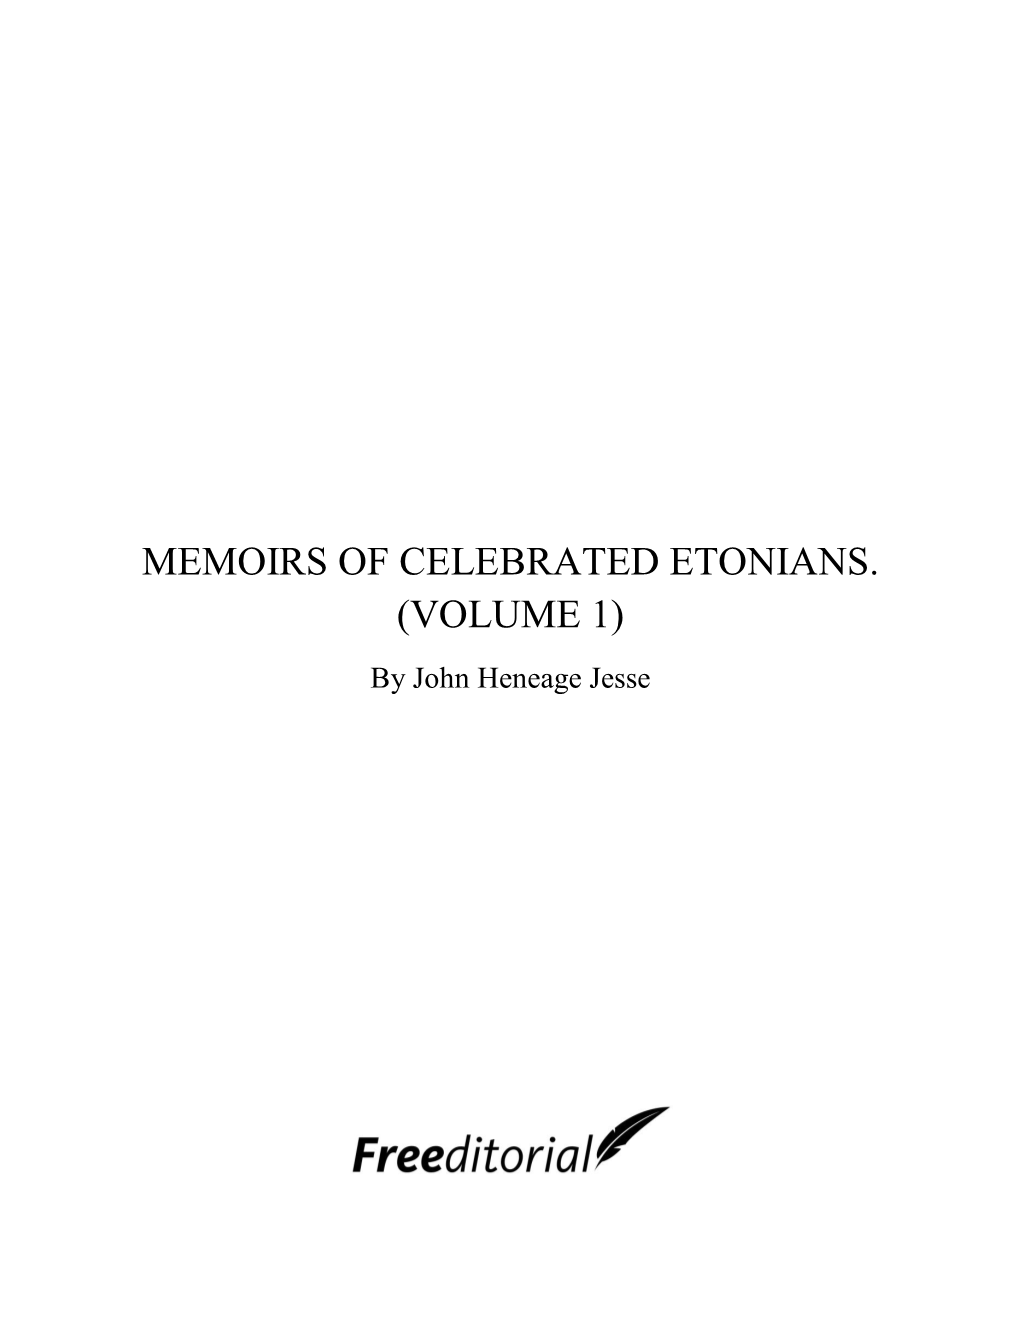 MEMOIRS of CELEBRATED ETONIANS. (VOLUME 1) by John Heneage Jesse